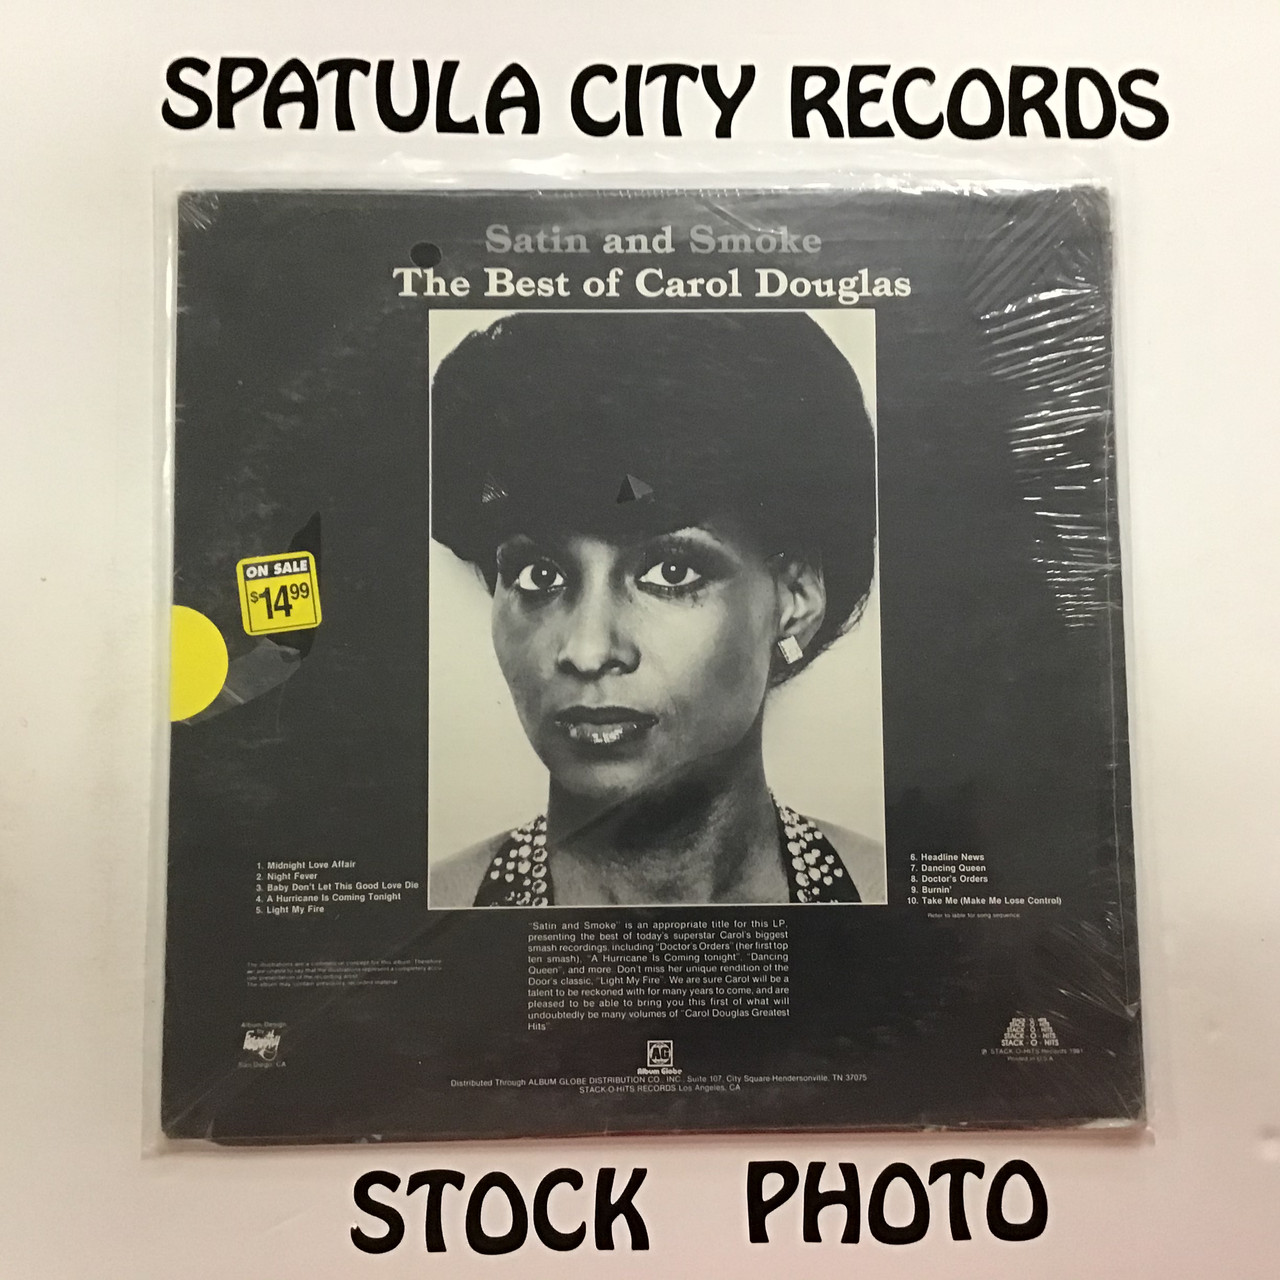 Carol Douglas - Satin and Smoke The Best of Carol Douglas - SEALED - vinyl record LP